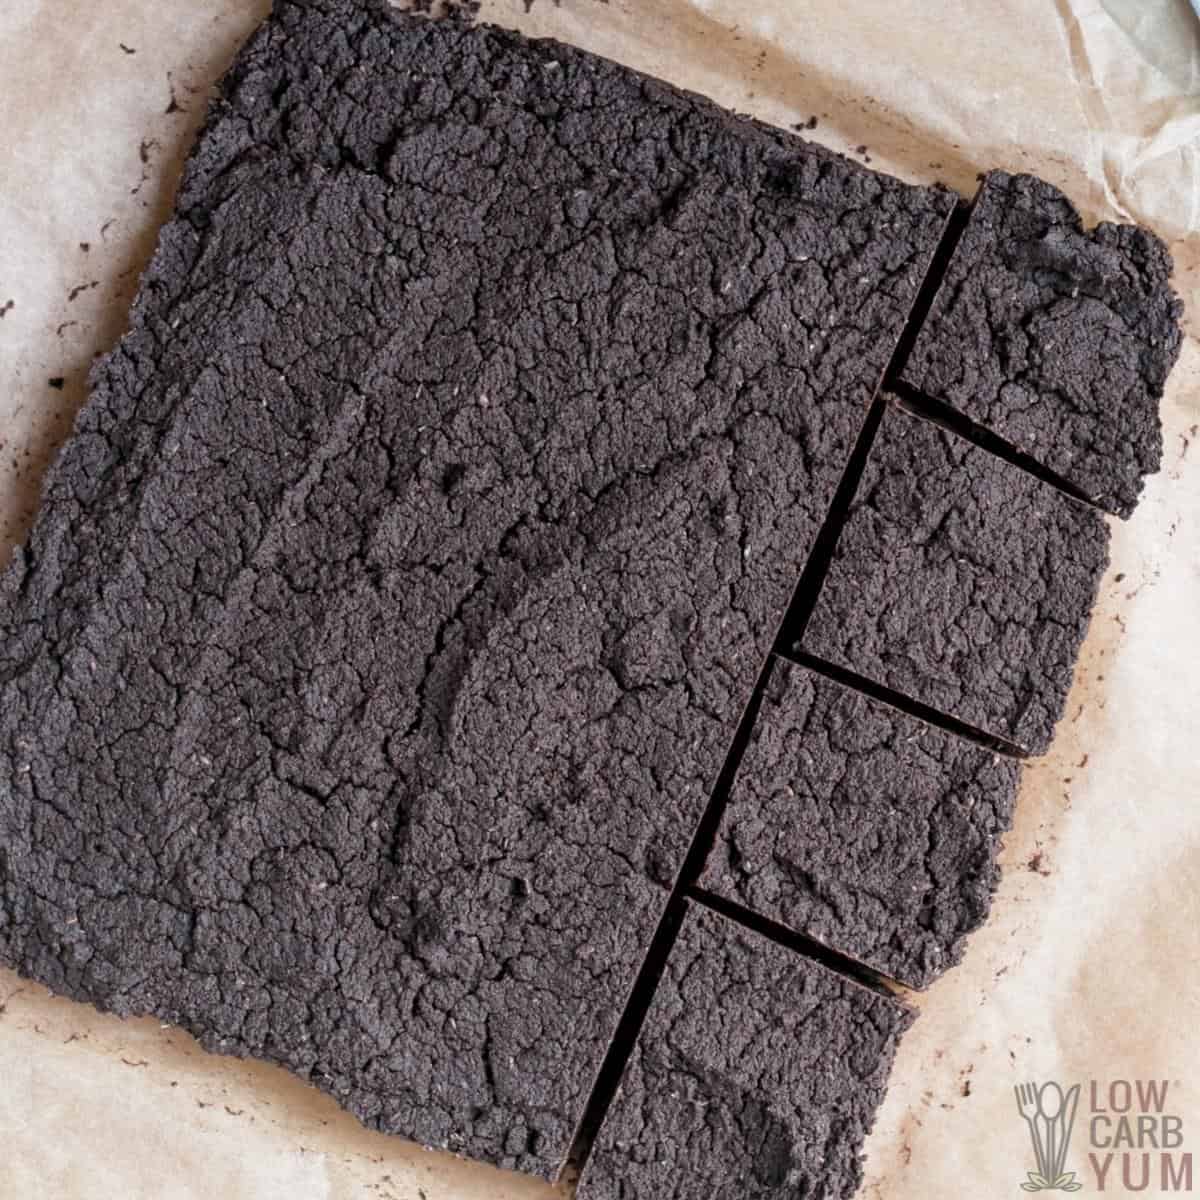 flourless brownies cut into squares.